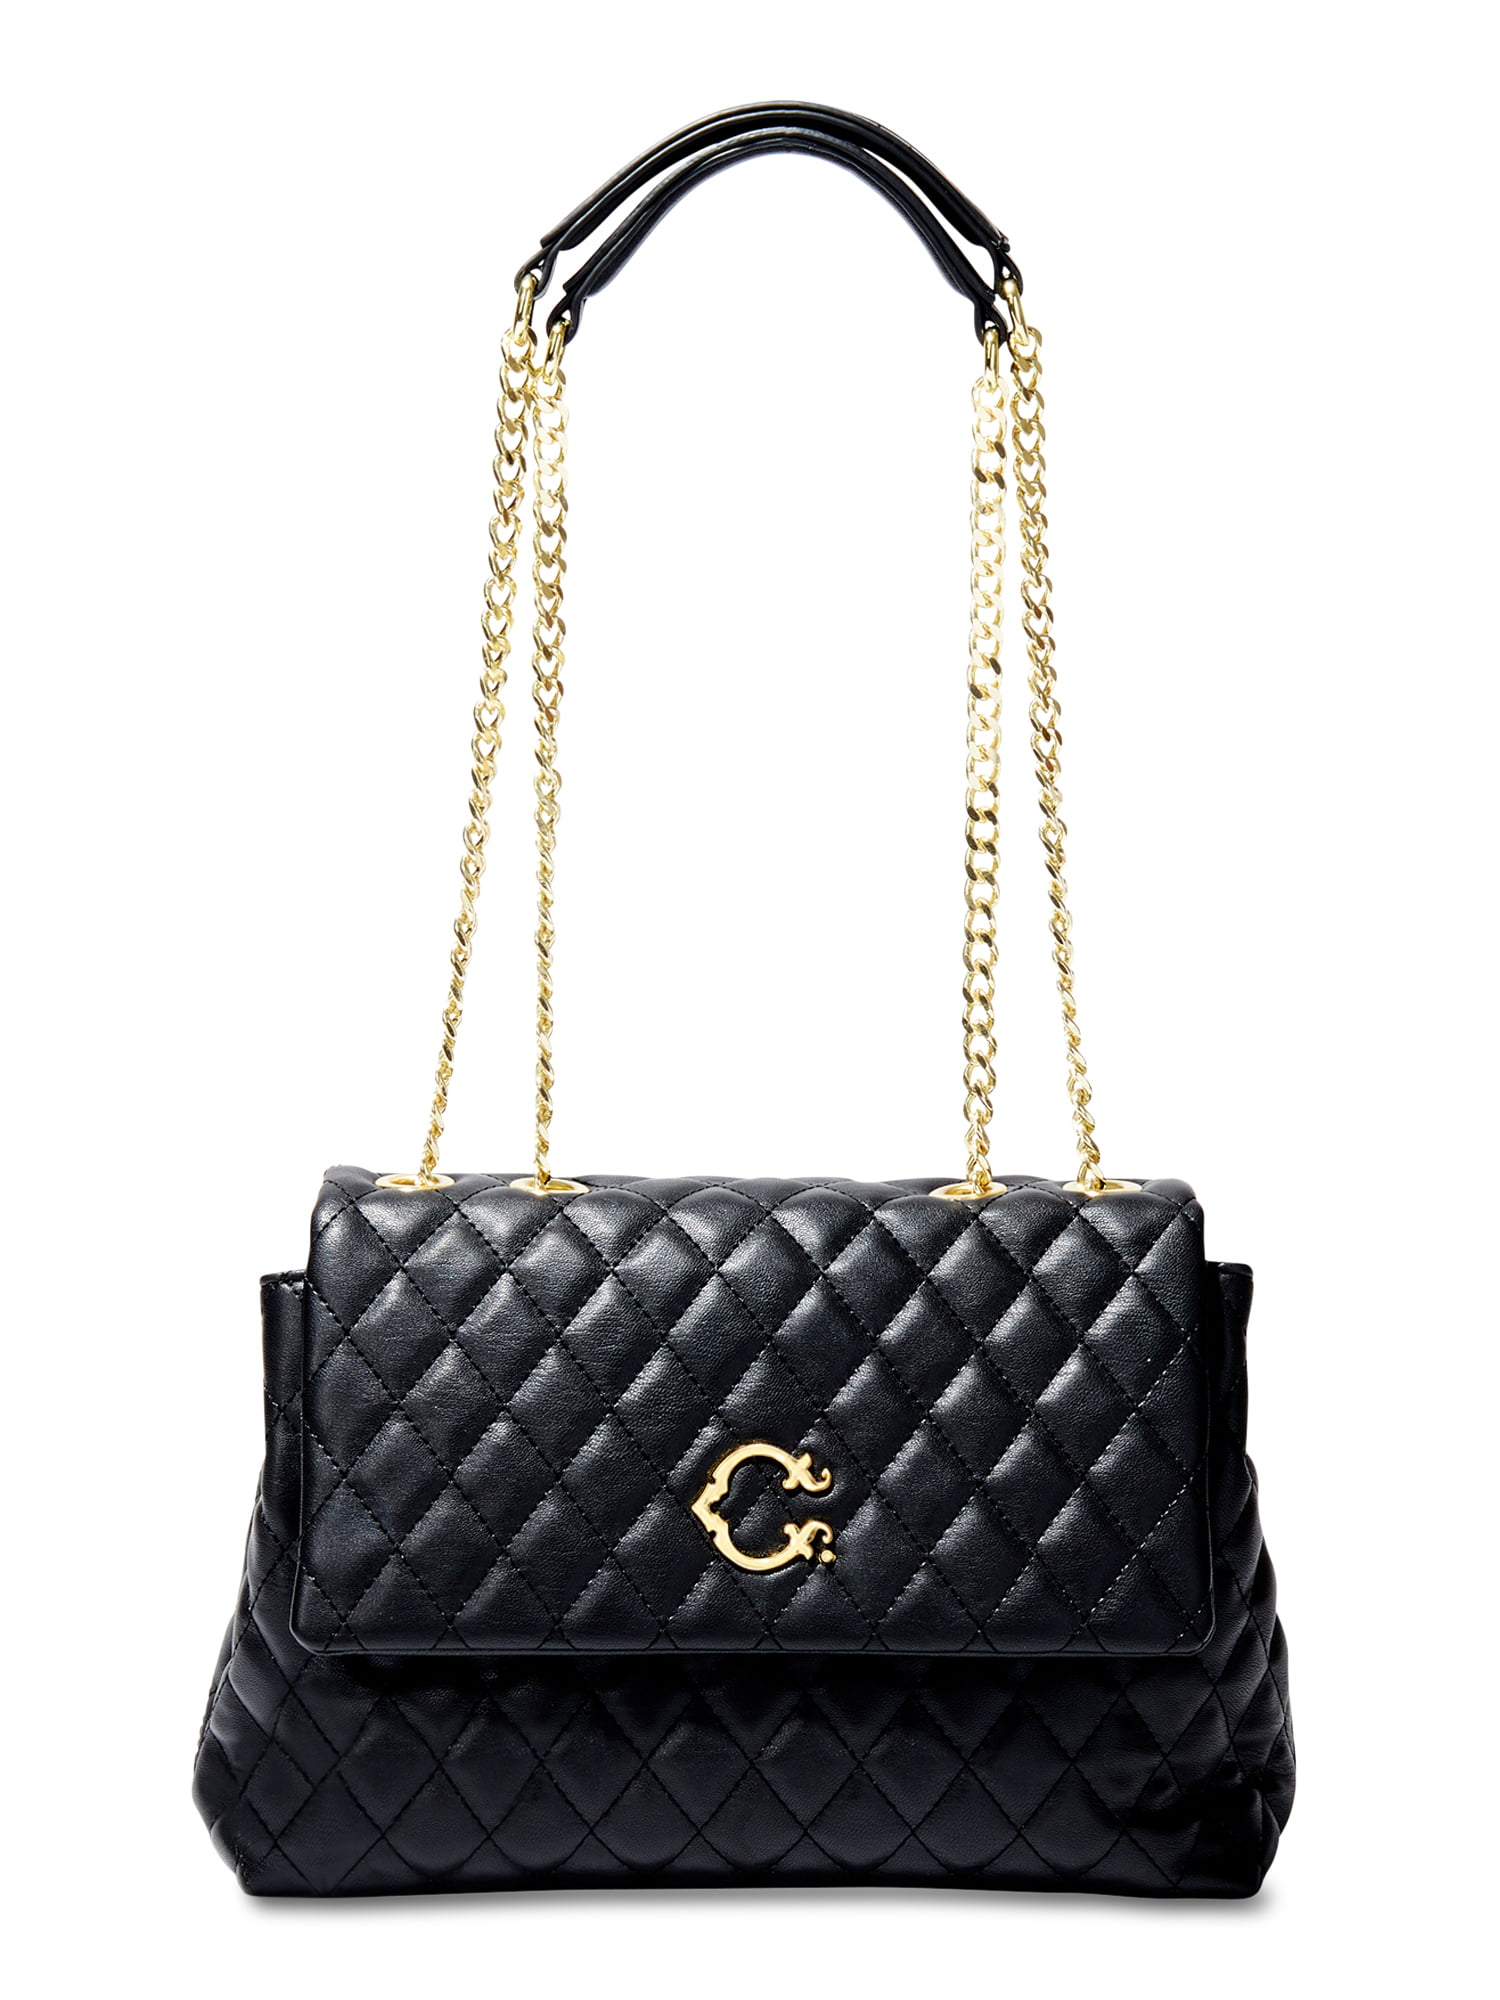 Chanel Matelasse Quilted Black Shimmer Leather Chain Shoulder Tote Bag